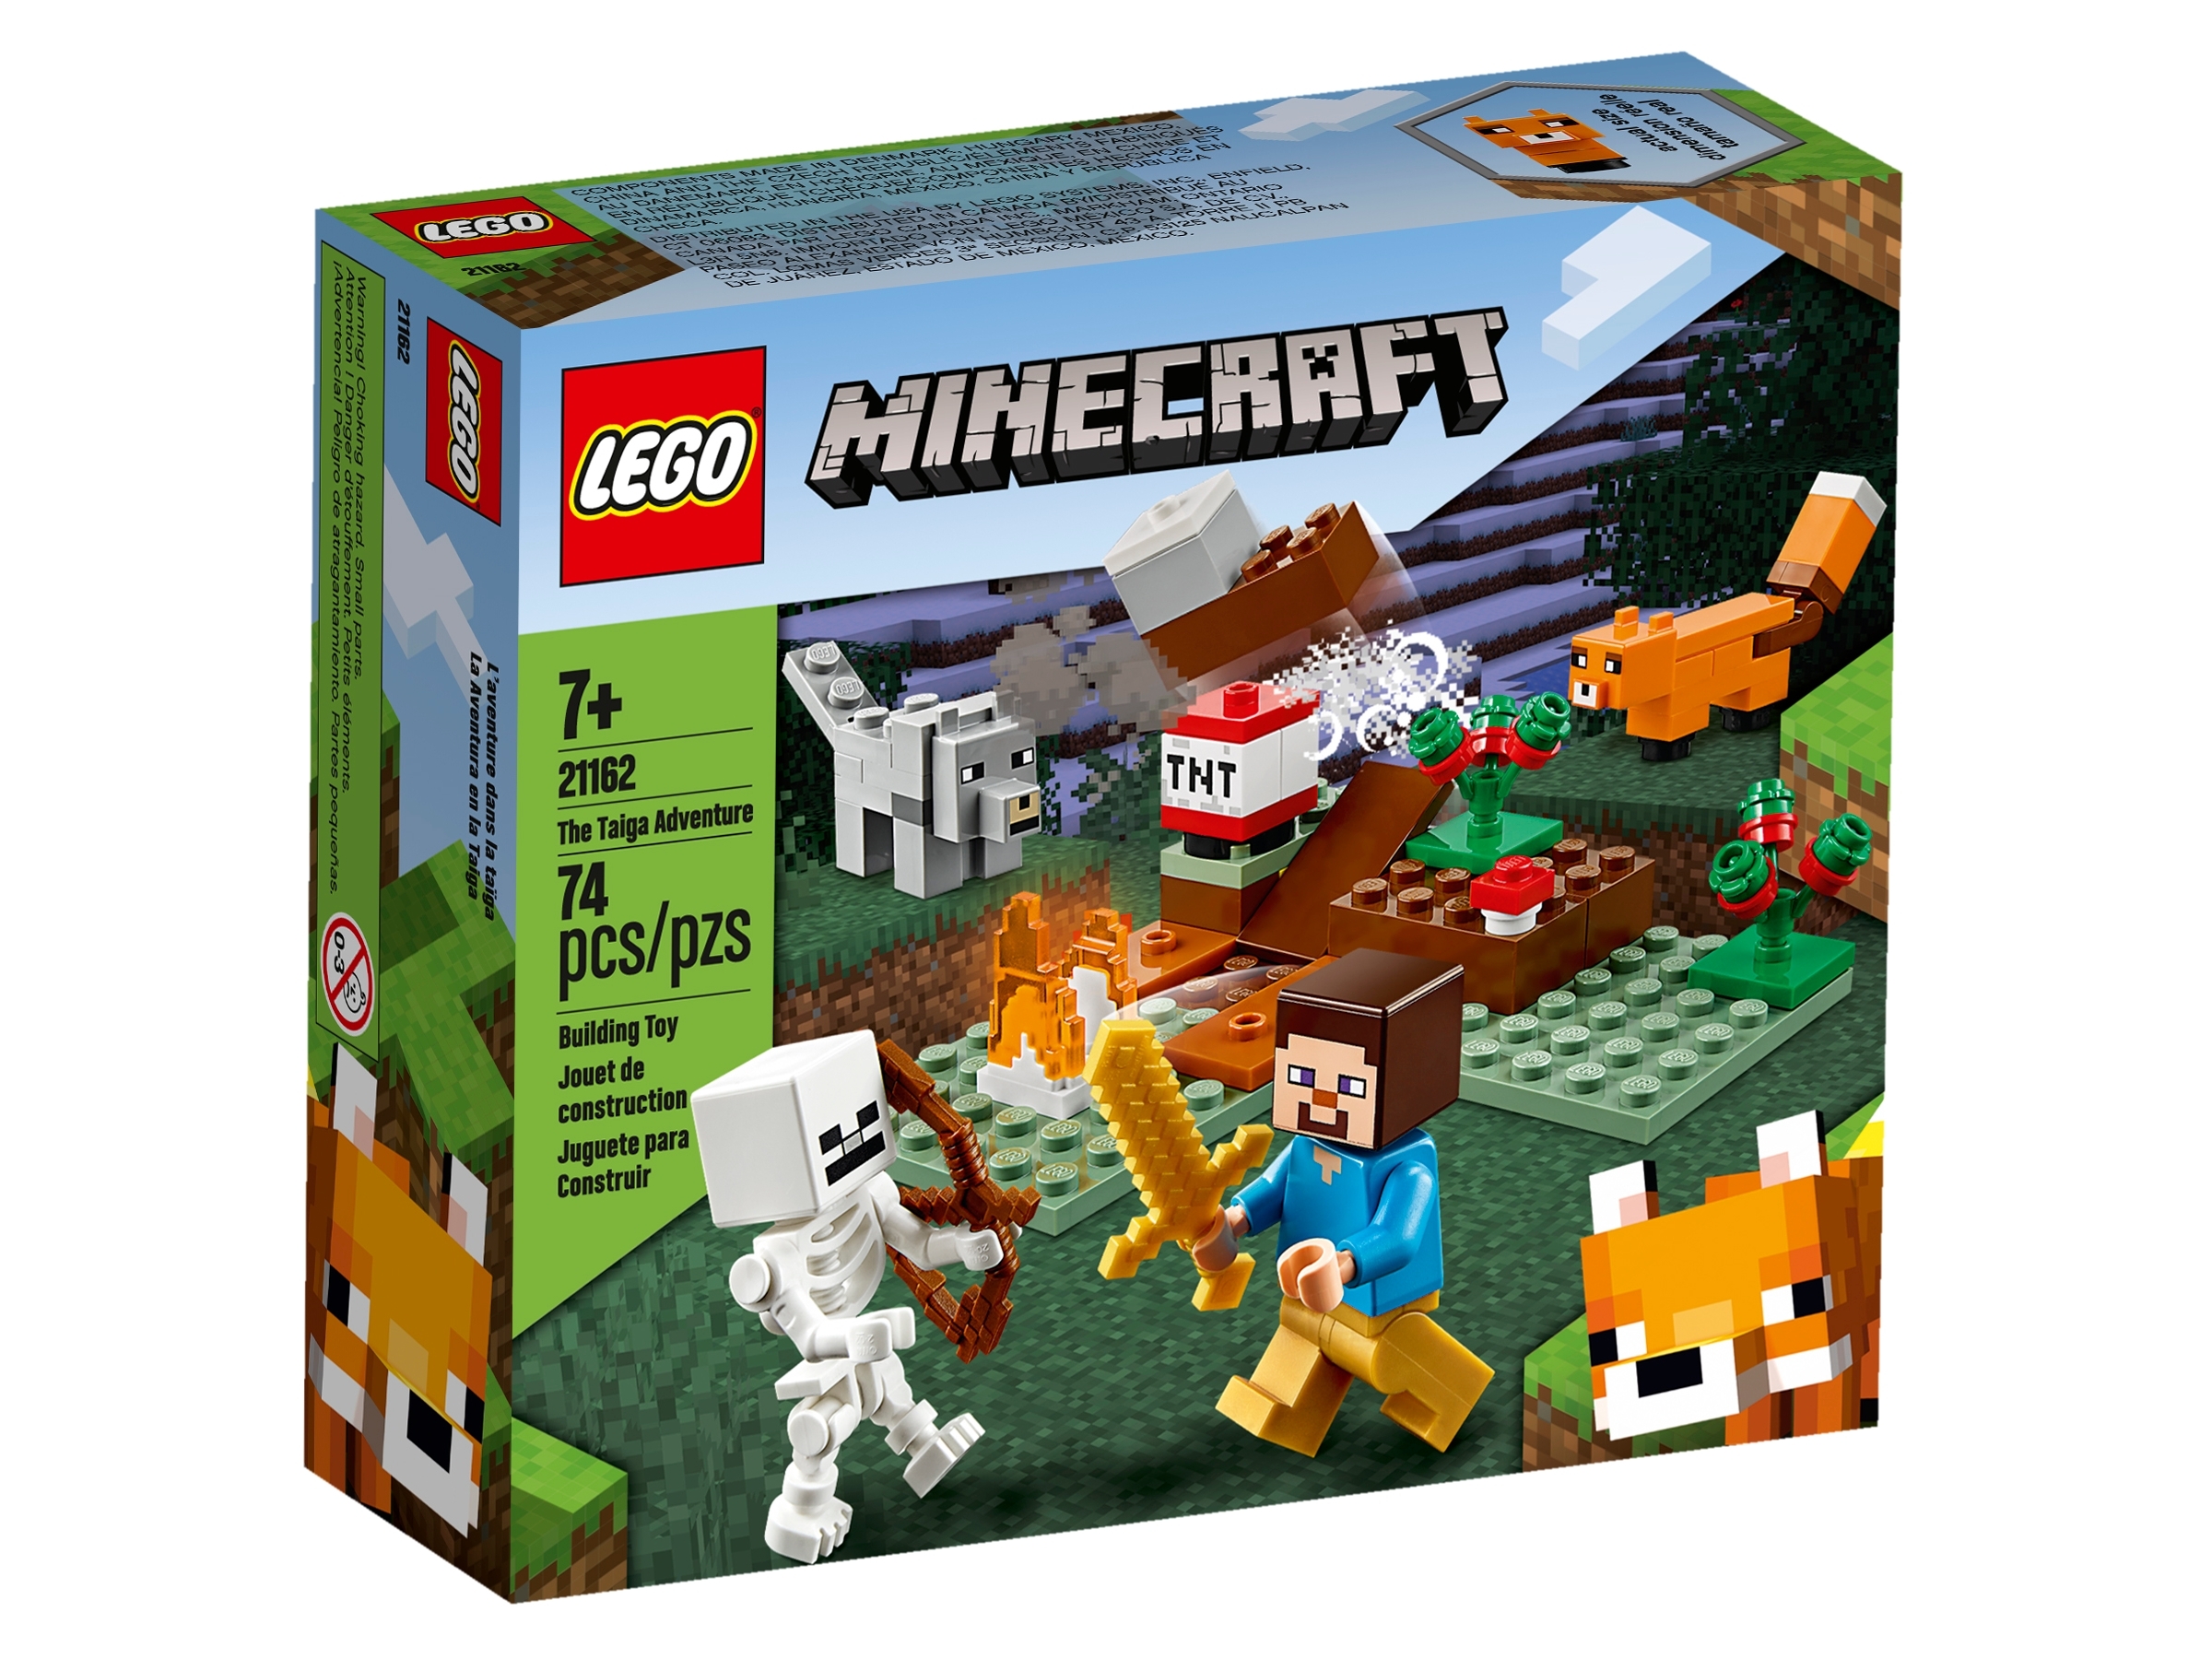 Set 21162 Lego Minecraft Brick Built Fox 